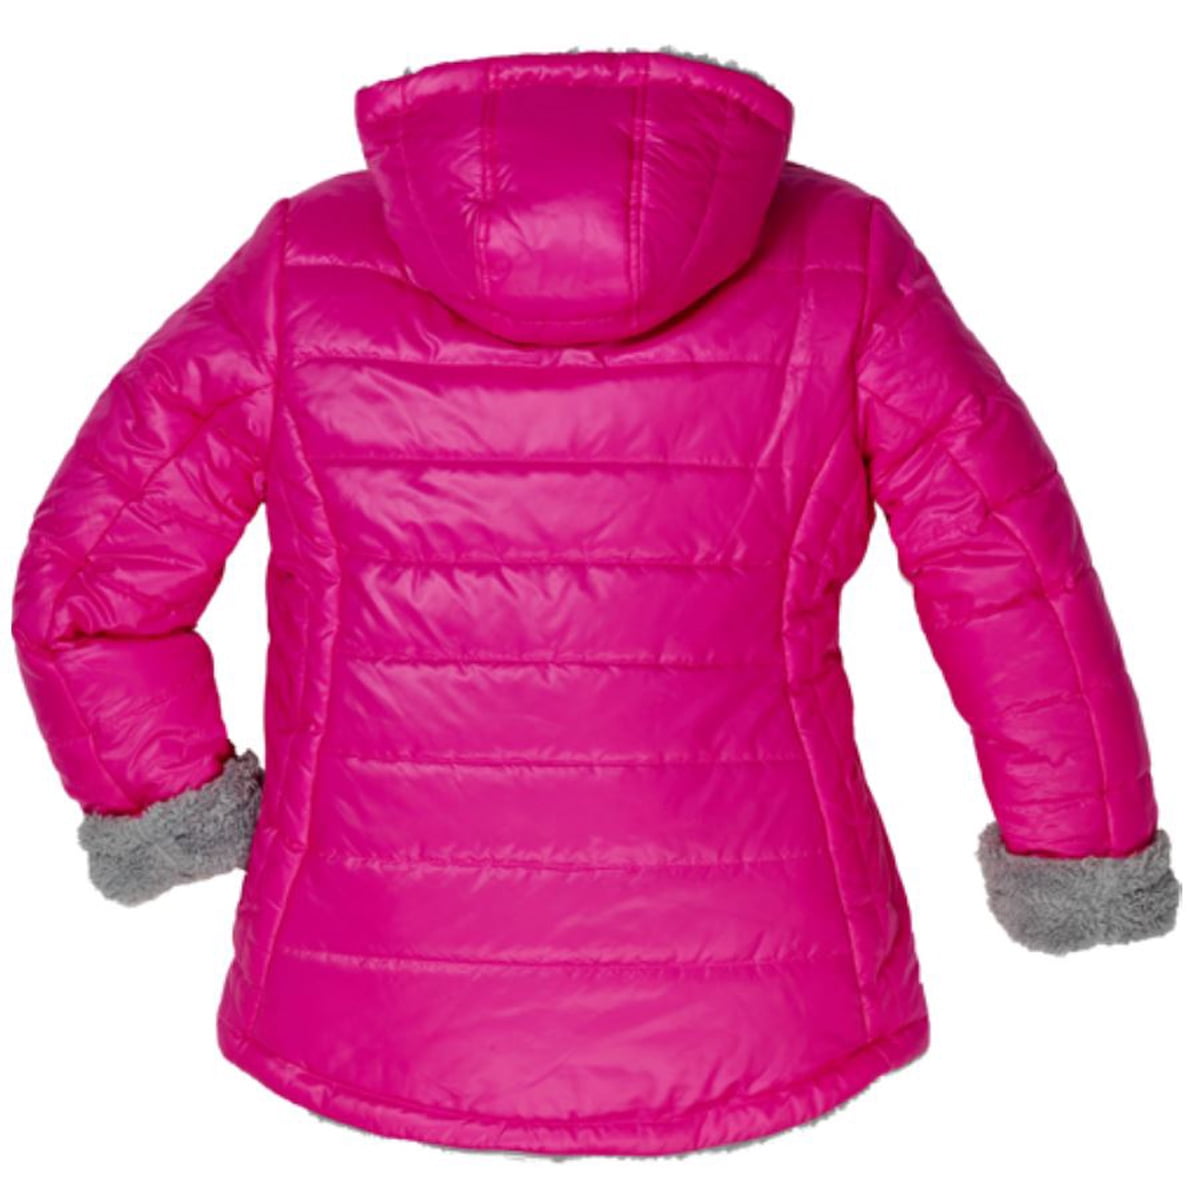 Gerry Girl's Hooded Reversible-to-Berber Down Winter Coat Jacket